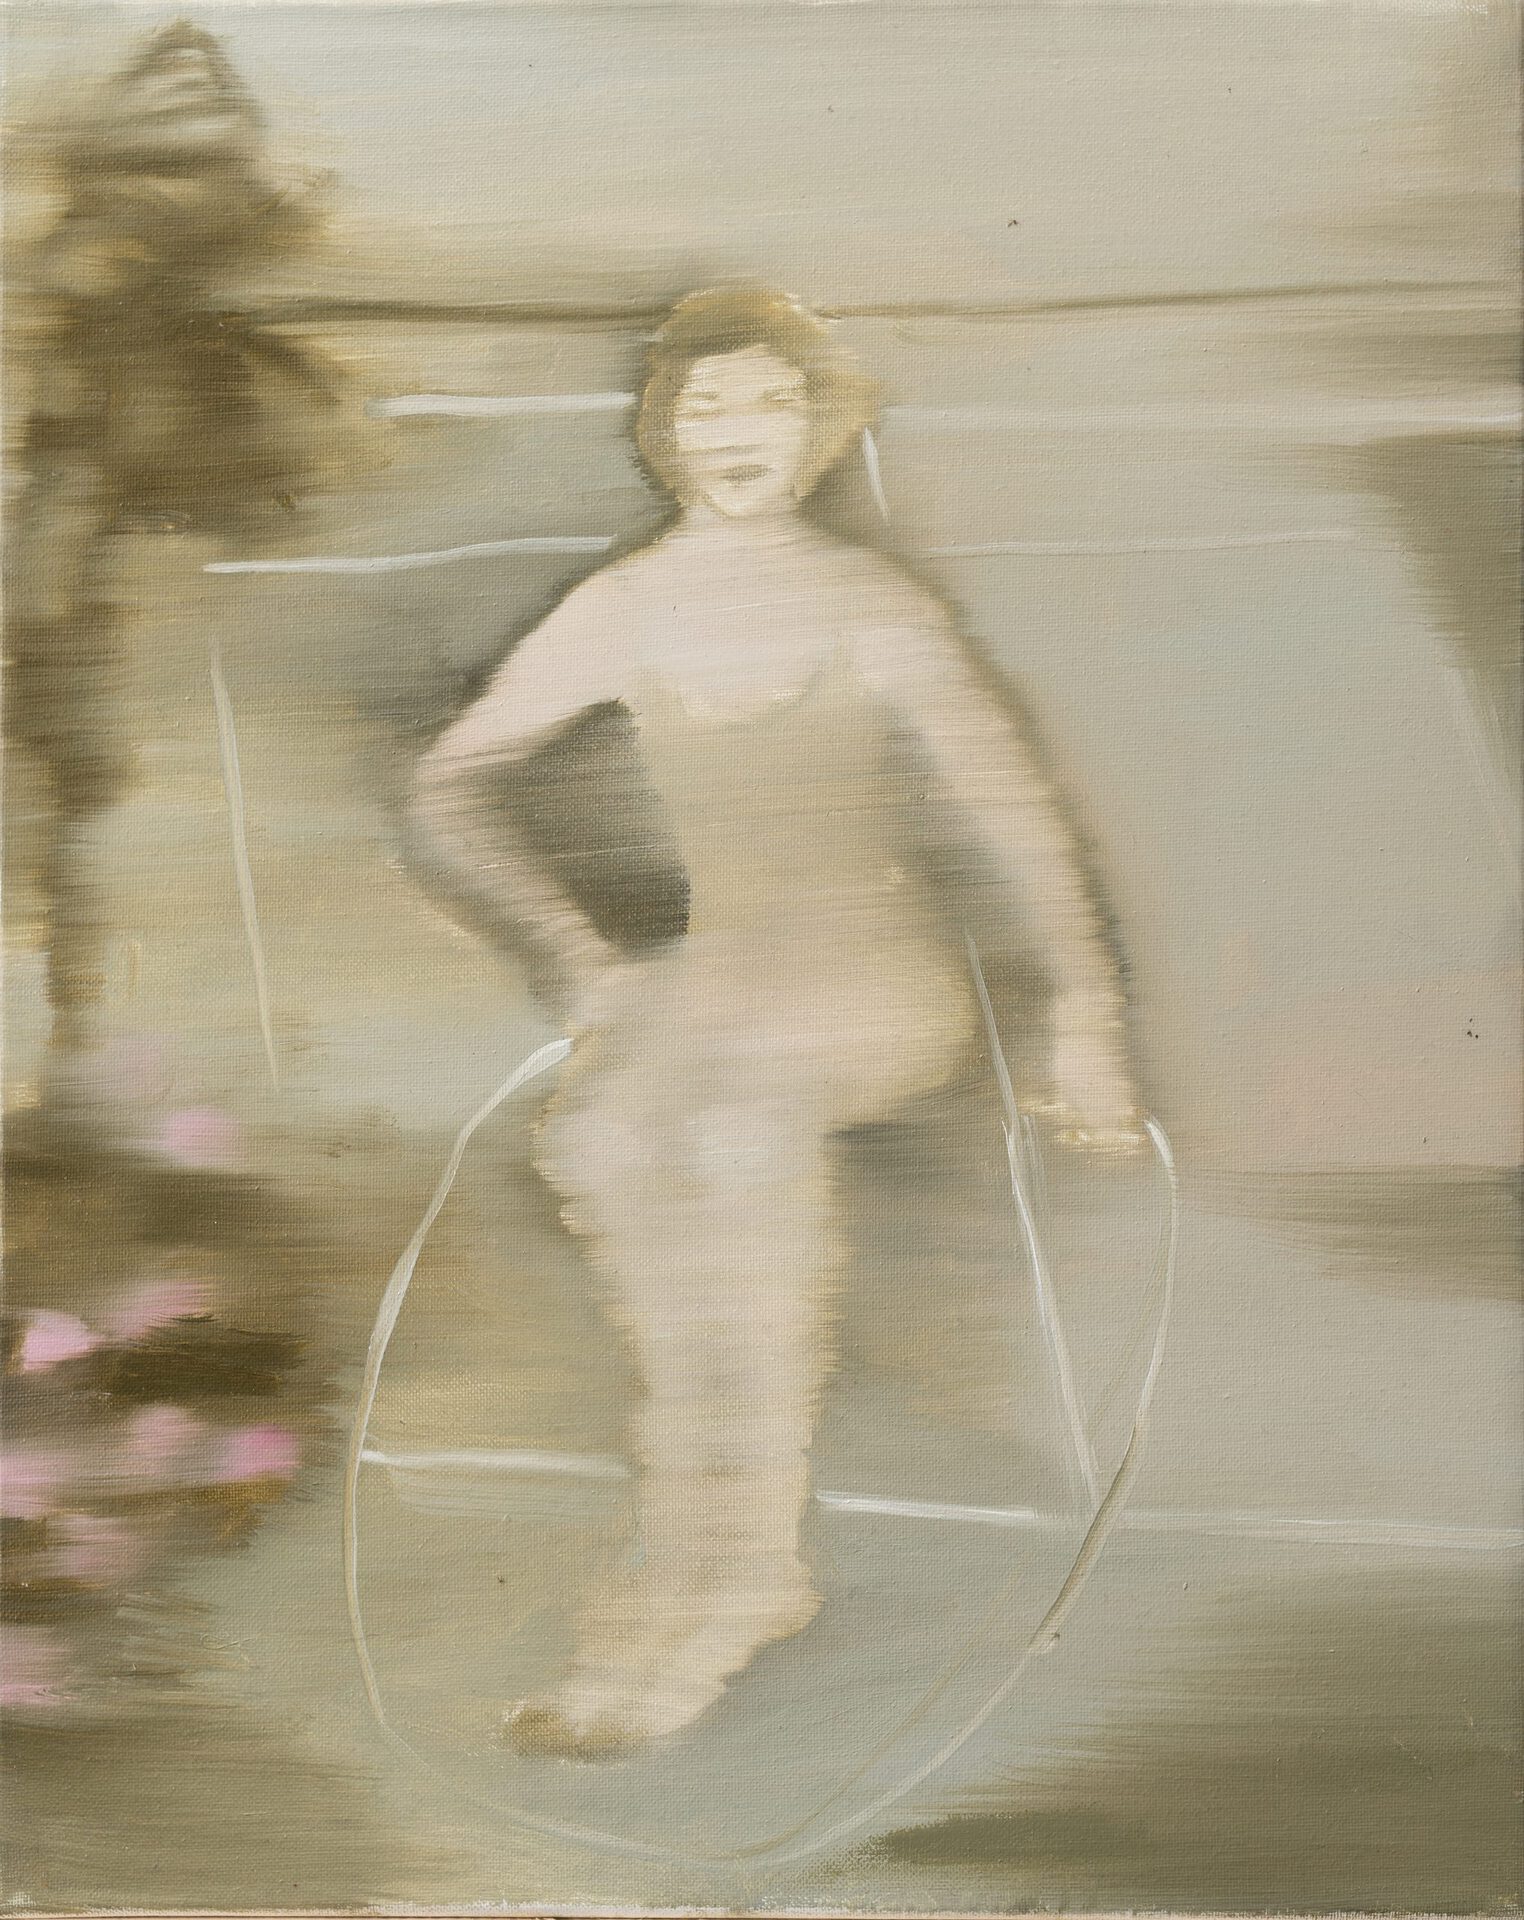 Mariam Aqubardia, untitled, 2021, Oil on canvas, 51x41cm